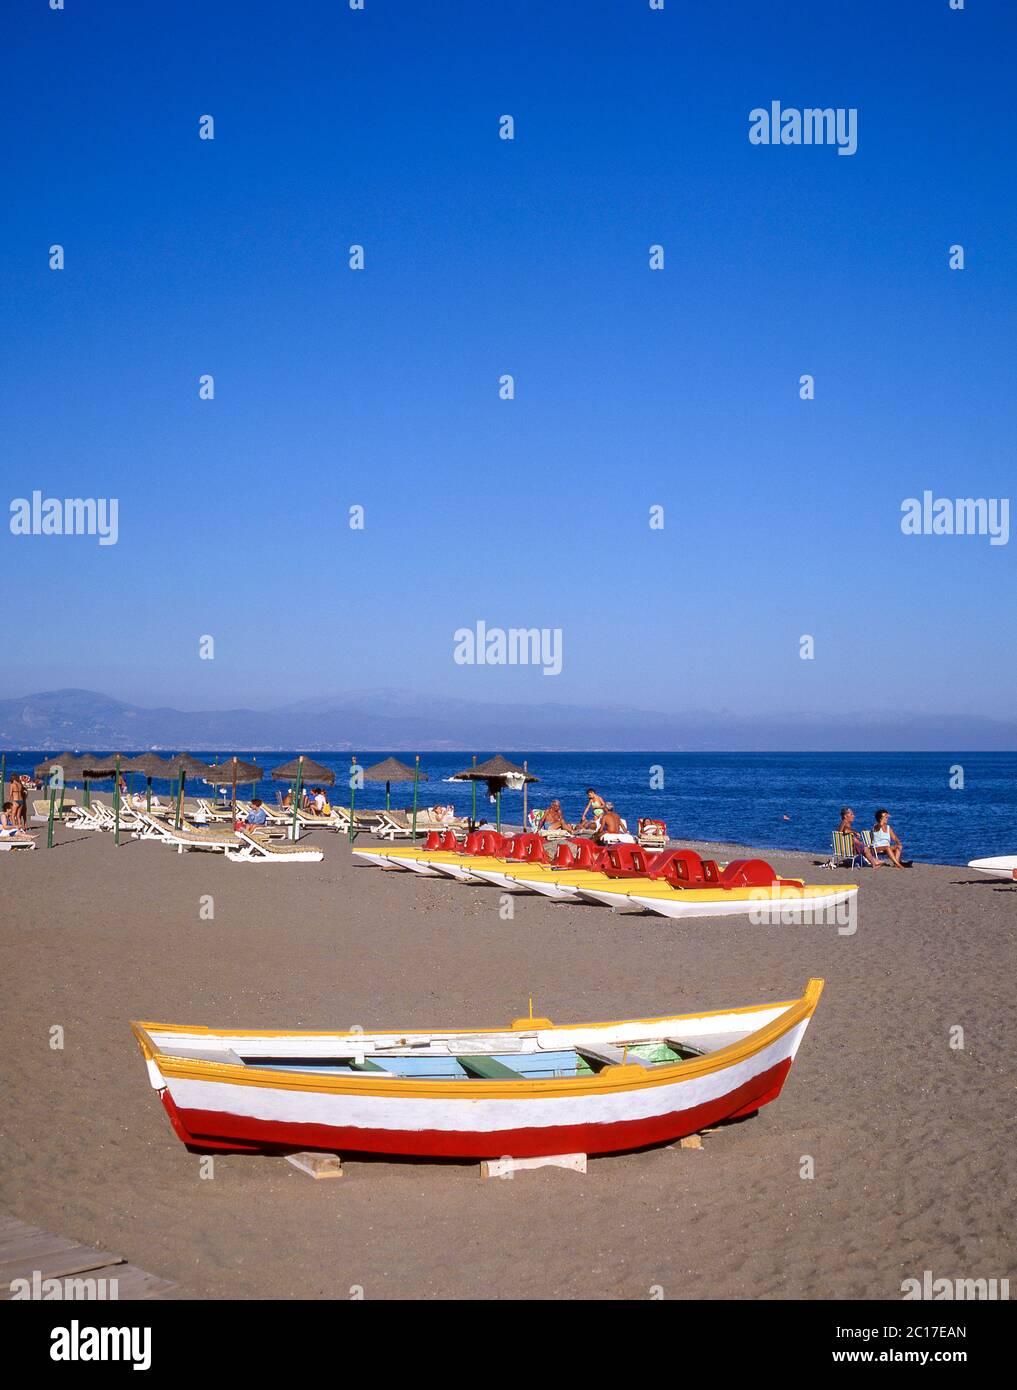 Vue sur la plage, Torremolinos, Costa del sol, Malaga province, Andalousie, Royaume d'Espagne Banque D'Images